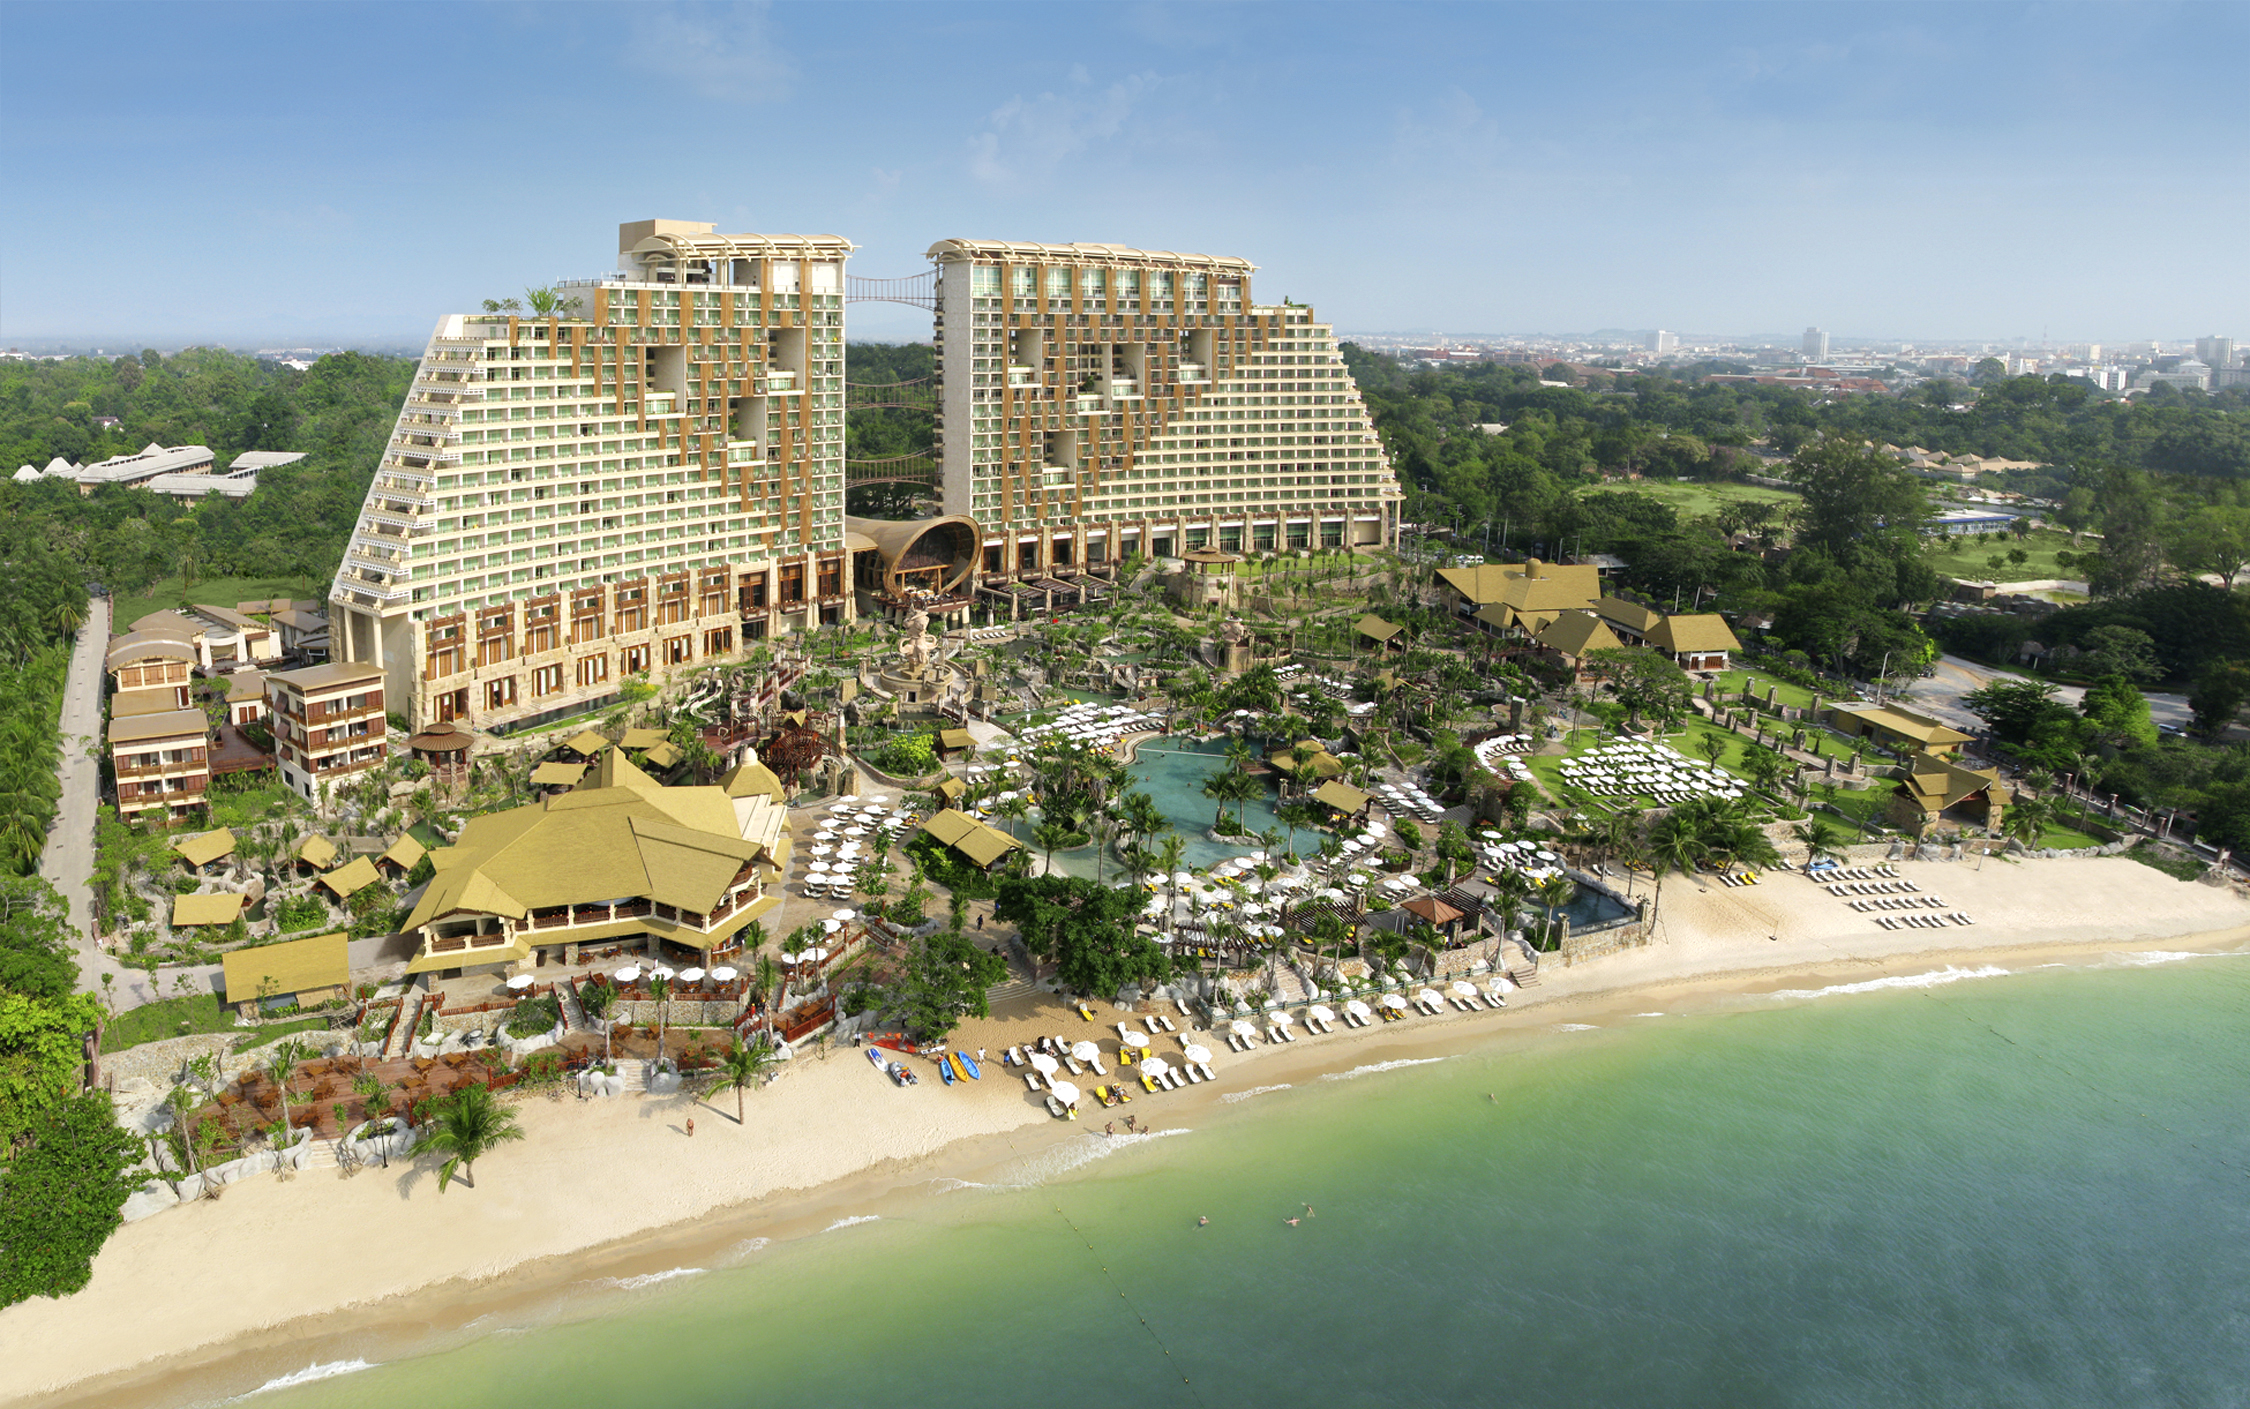 Escape To A ‘Lost World’ Paradise At Centara Grand Mirage Beach Resort Pattaya